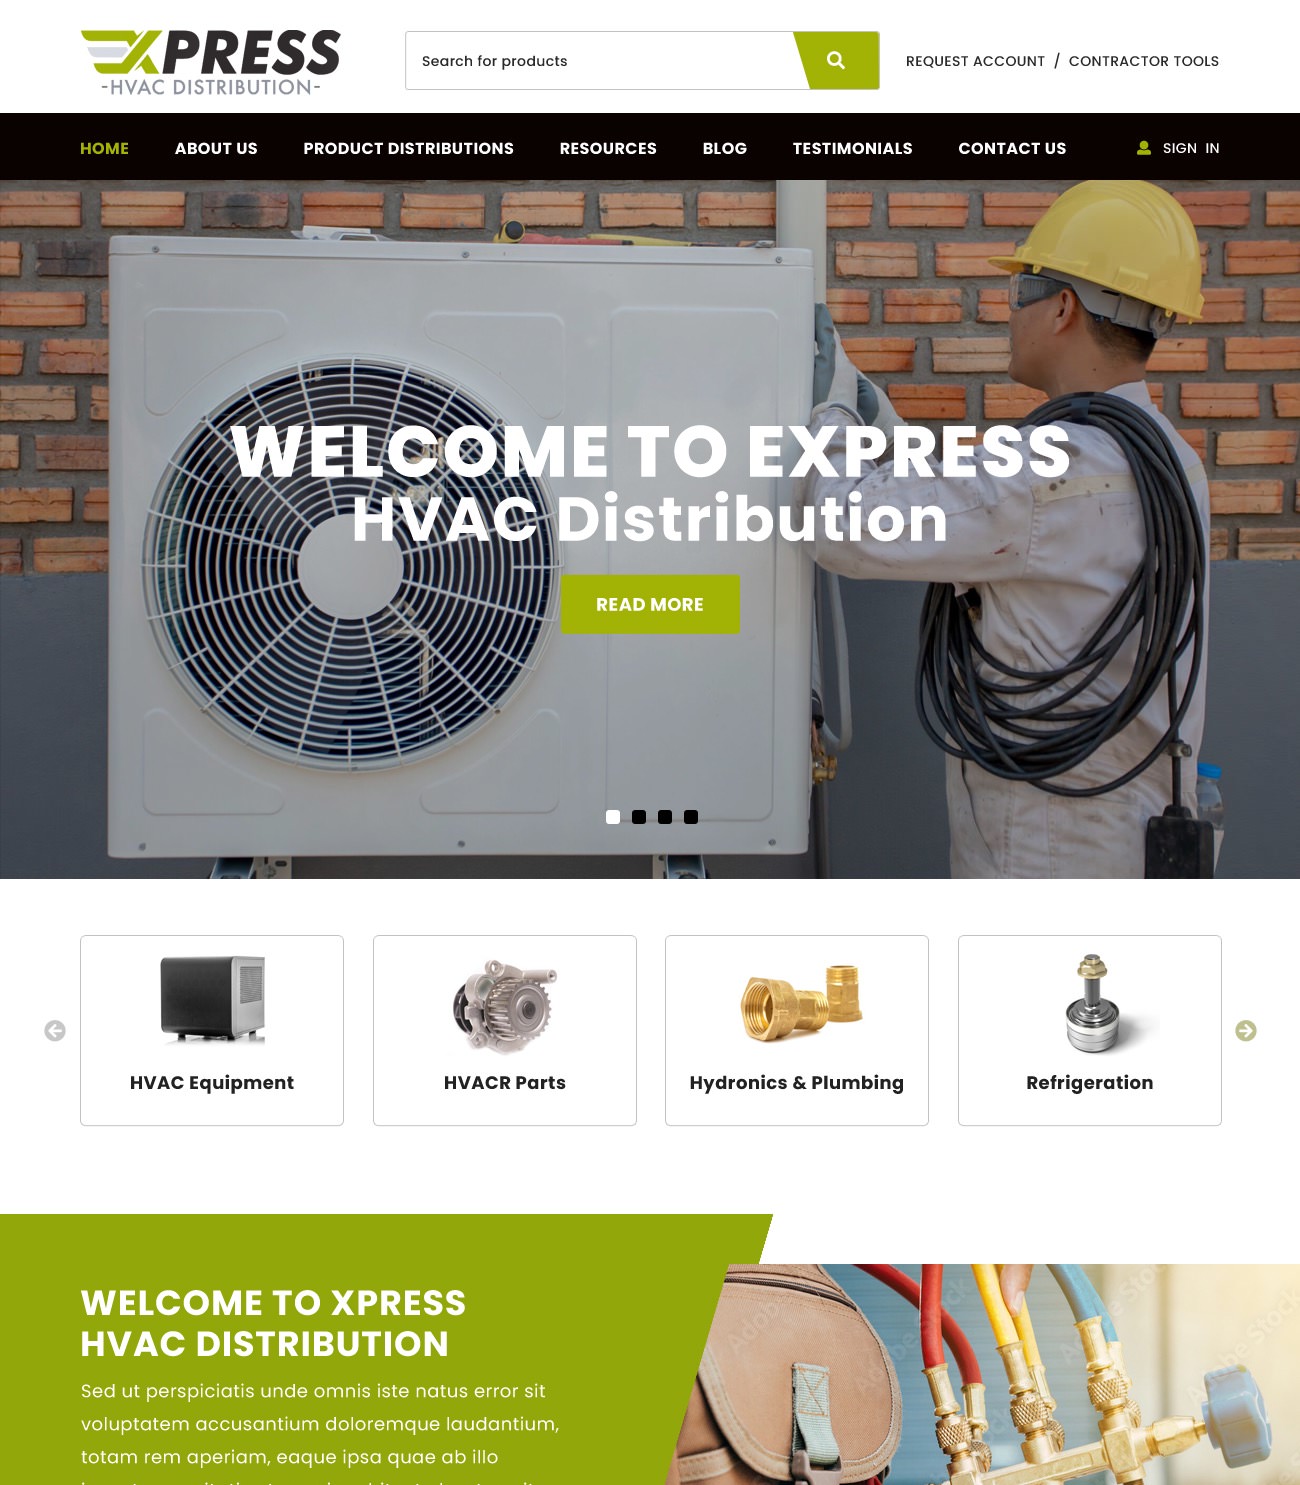 HVAC distributor website design example